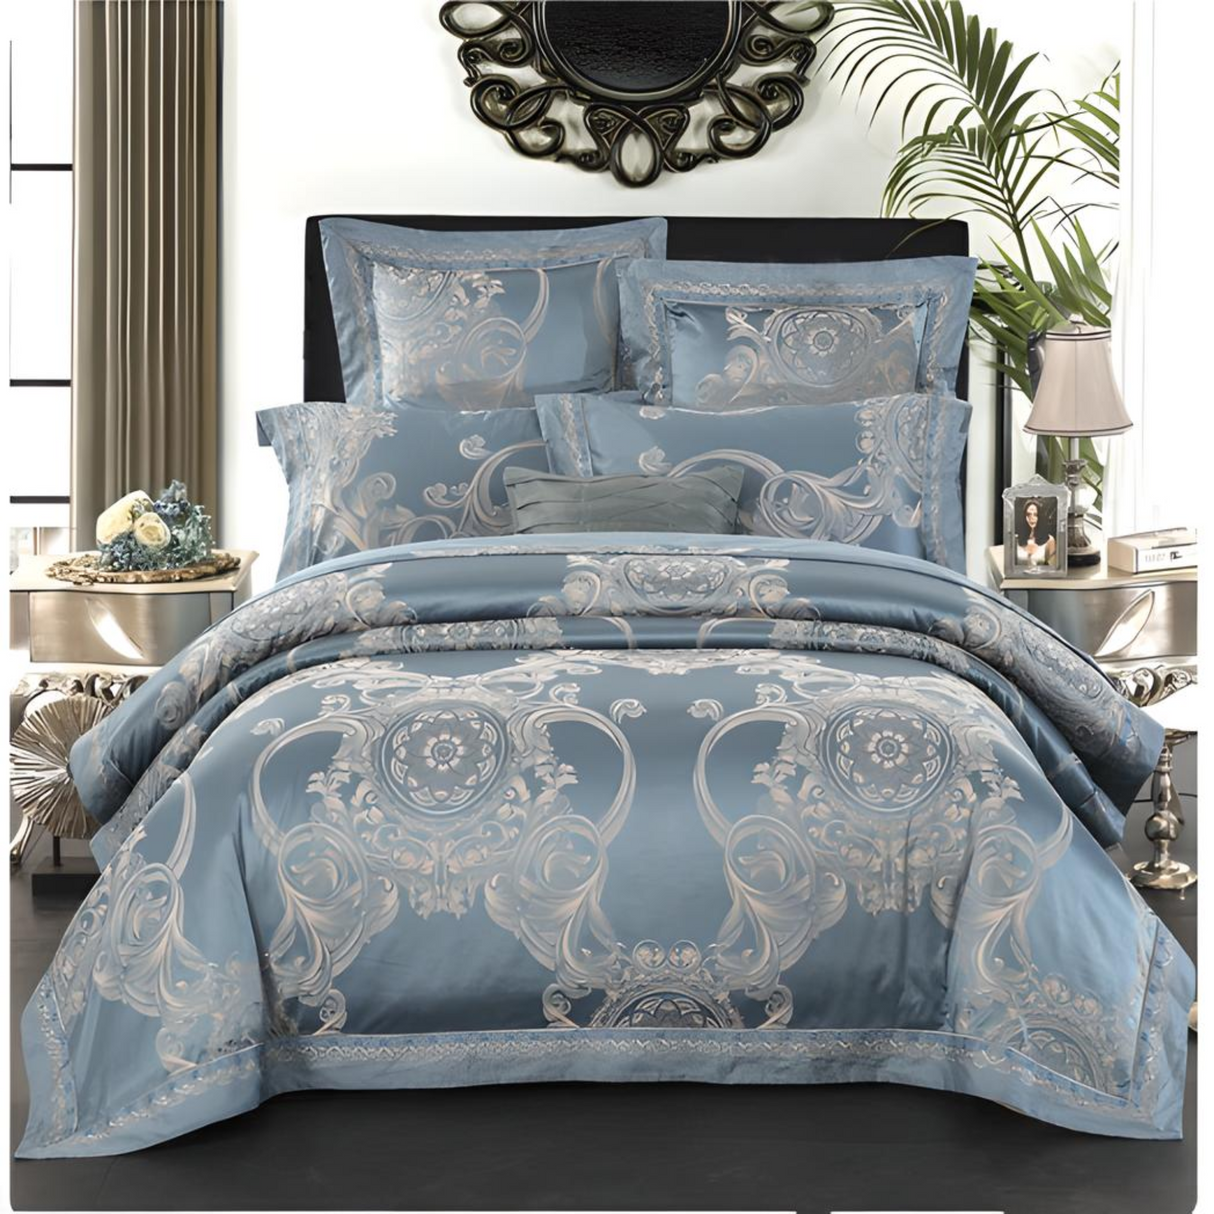 Regal Silk Elegance Jacquard Bedding Set 2 Duvet covers Julia M Home & Kitchen Color 9 Fitted sheet style Queen 4Pcs